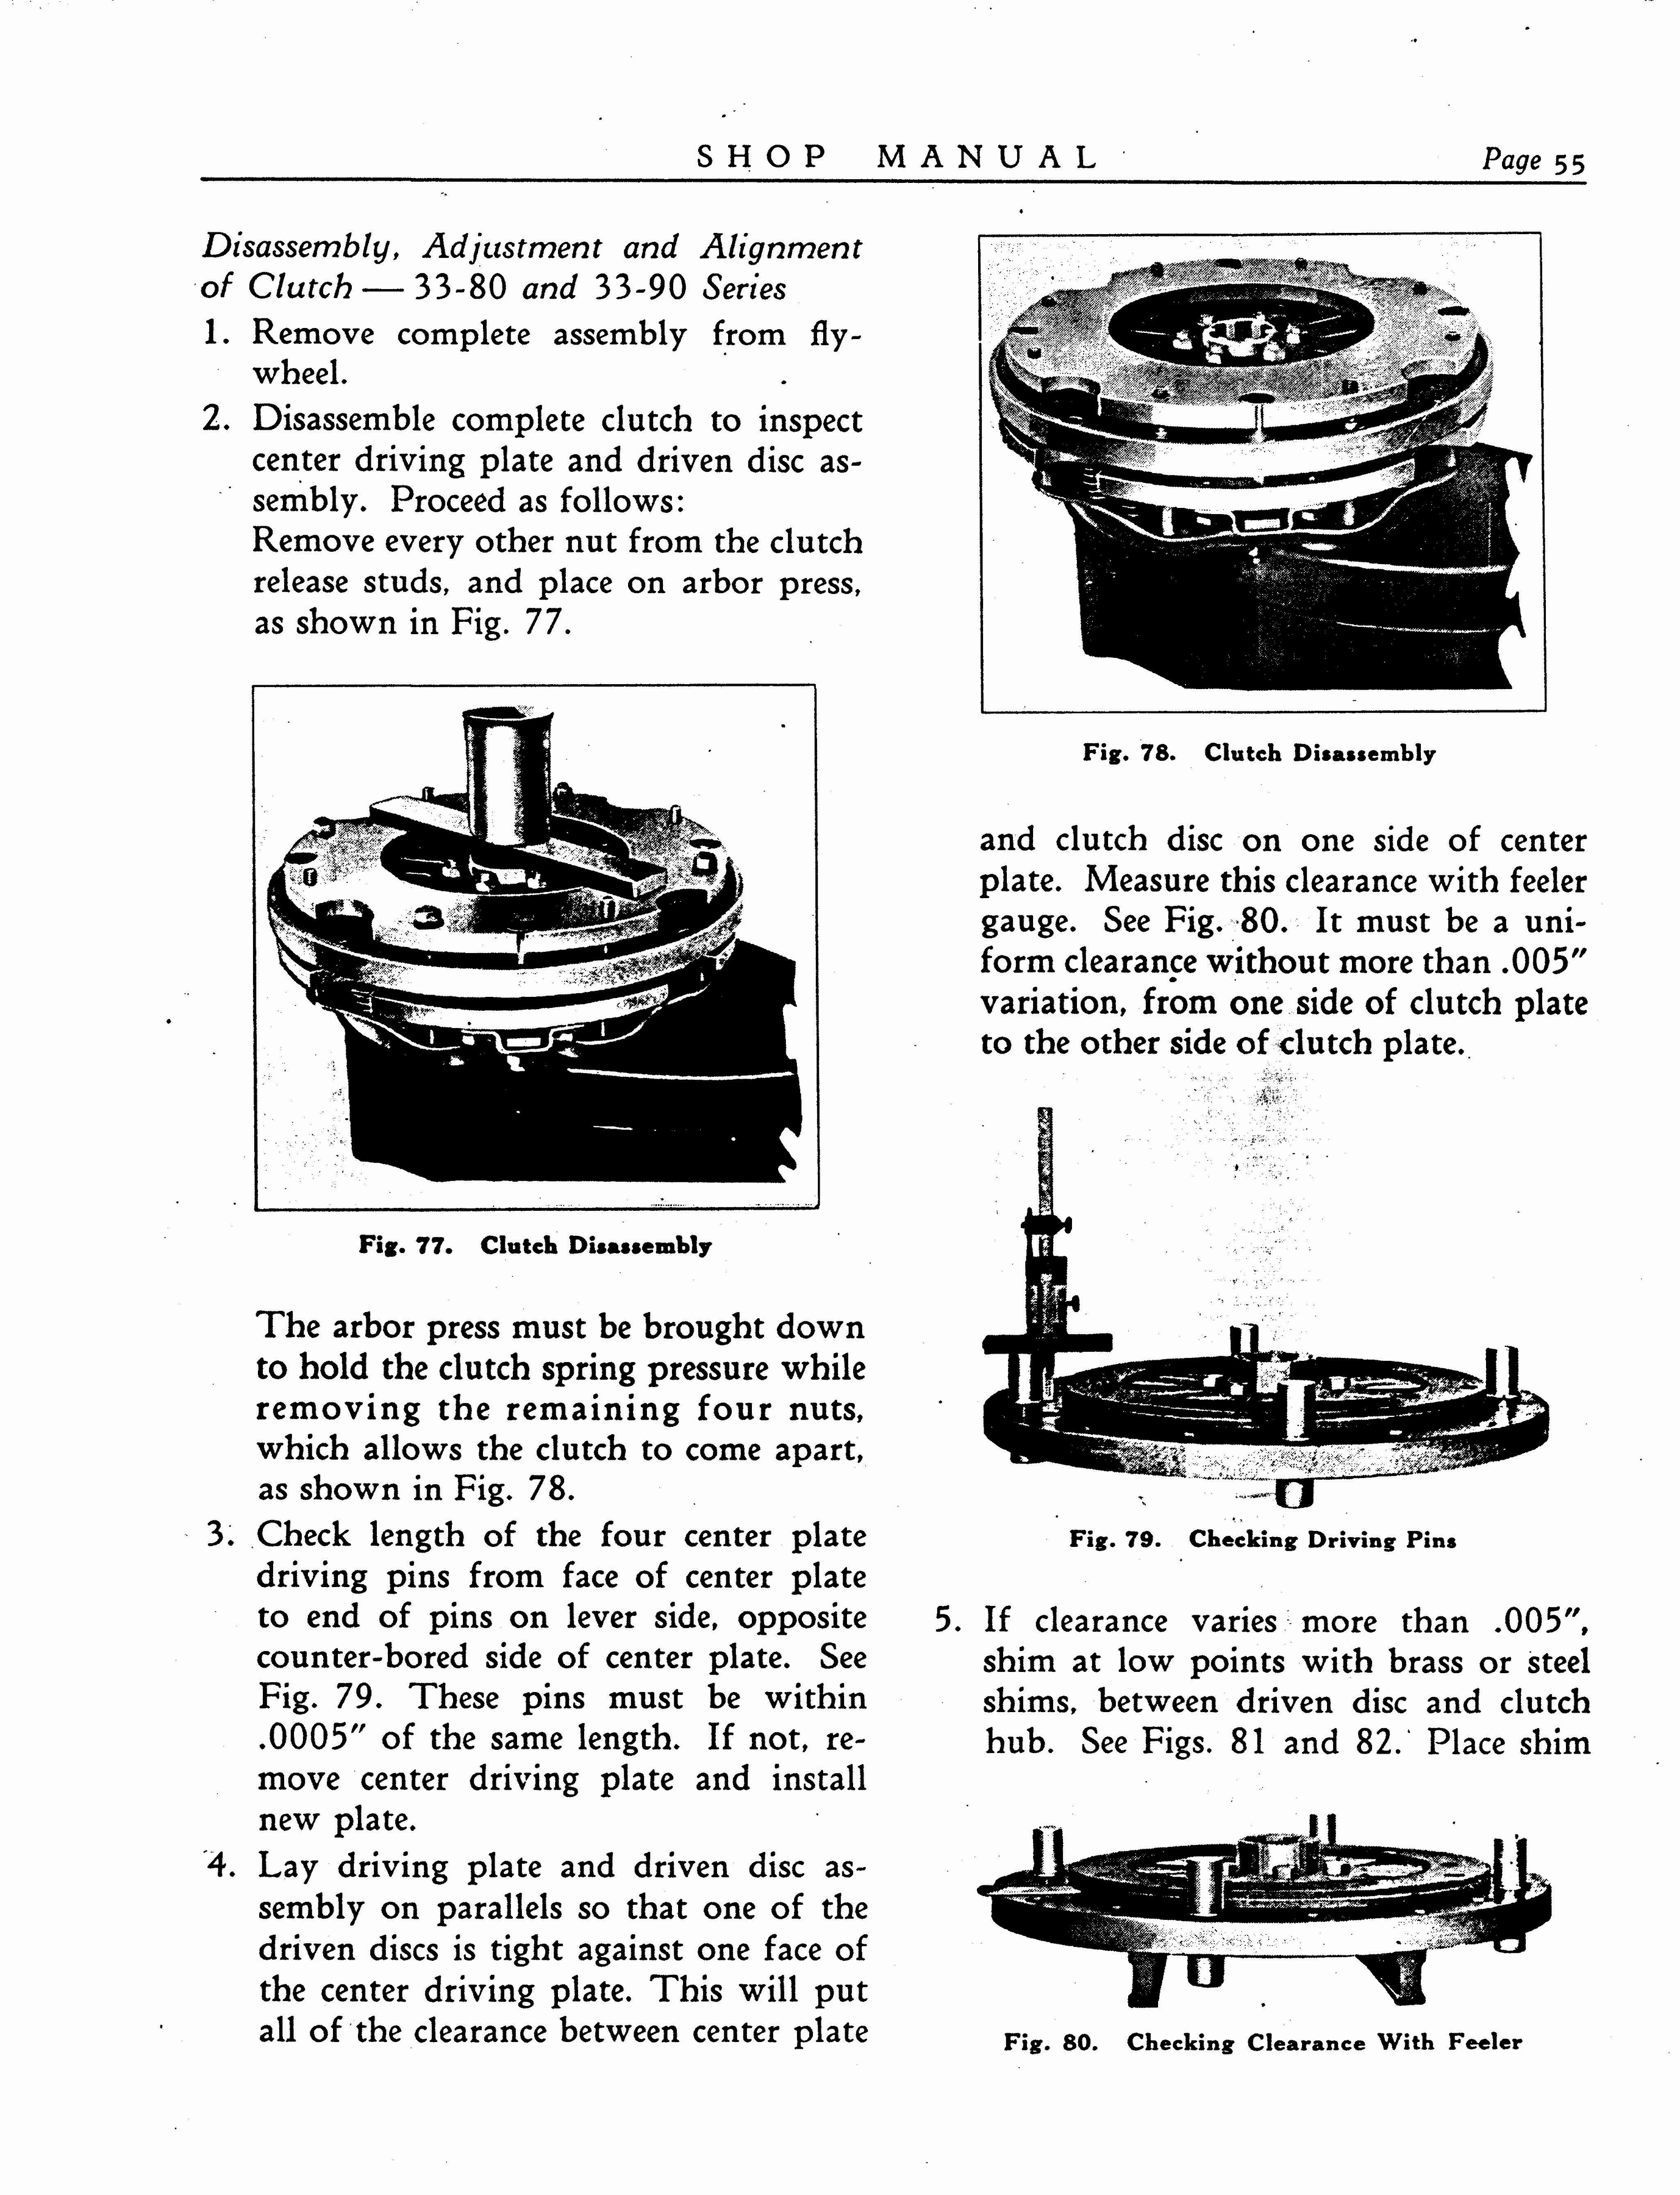 n_1933 Buick Shop Manual_Page_056.jpg